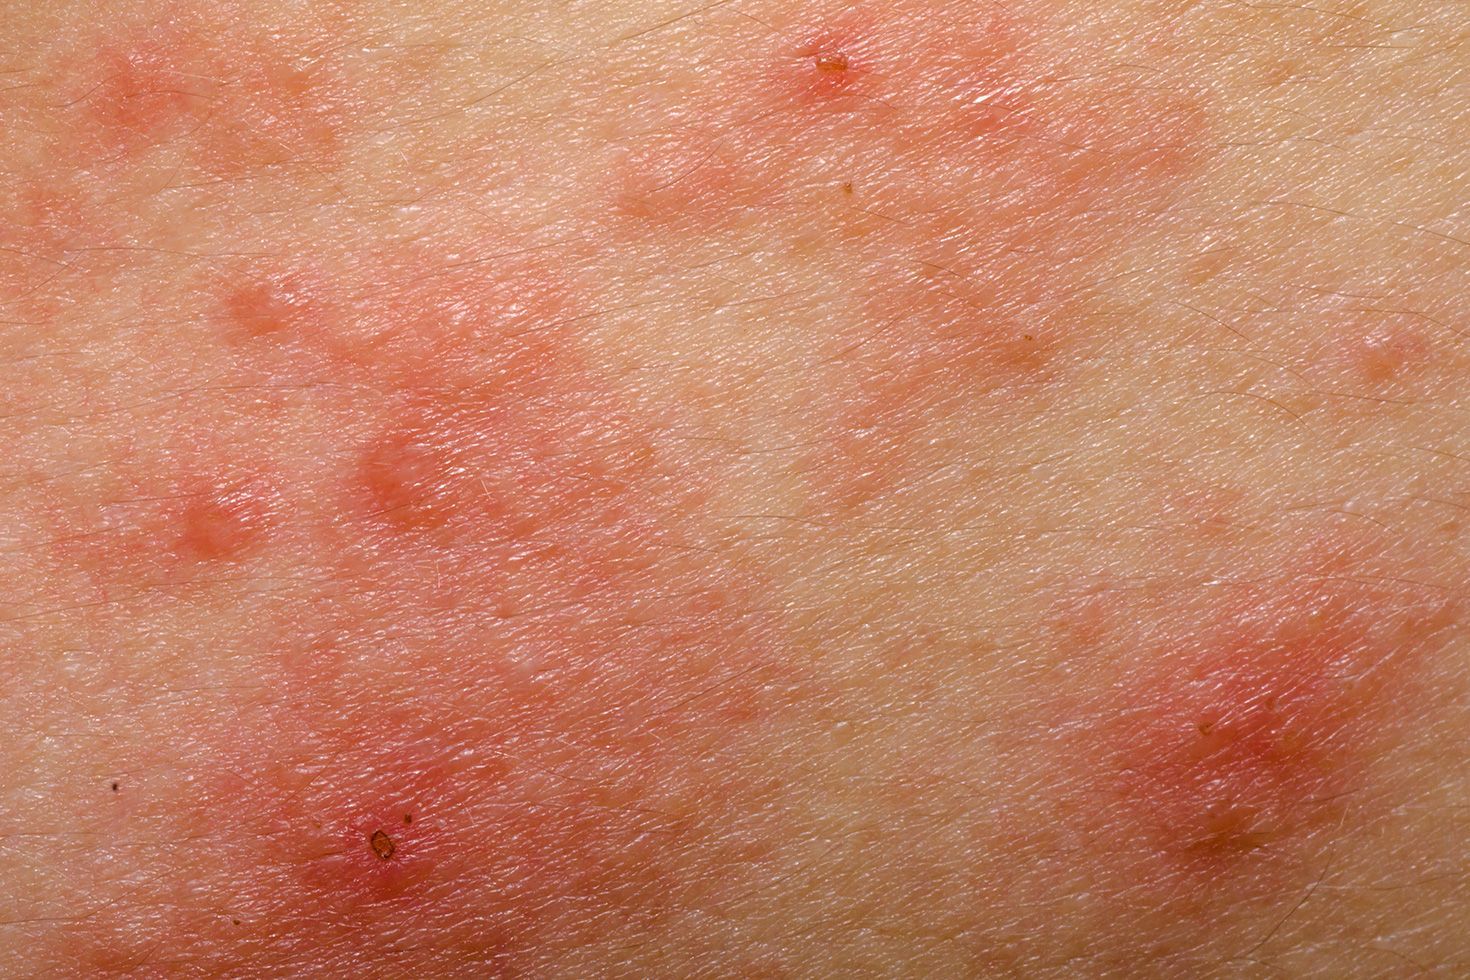 Itchy bleeding rash around anus